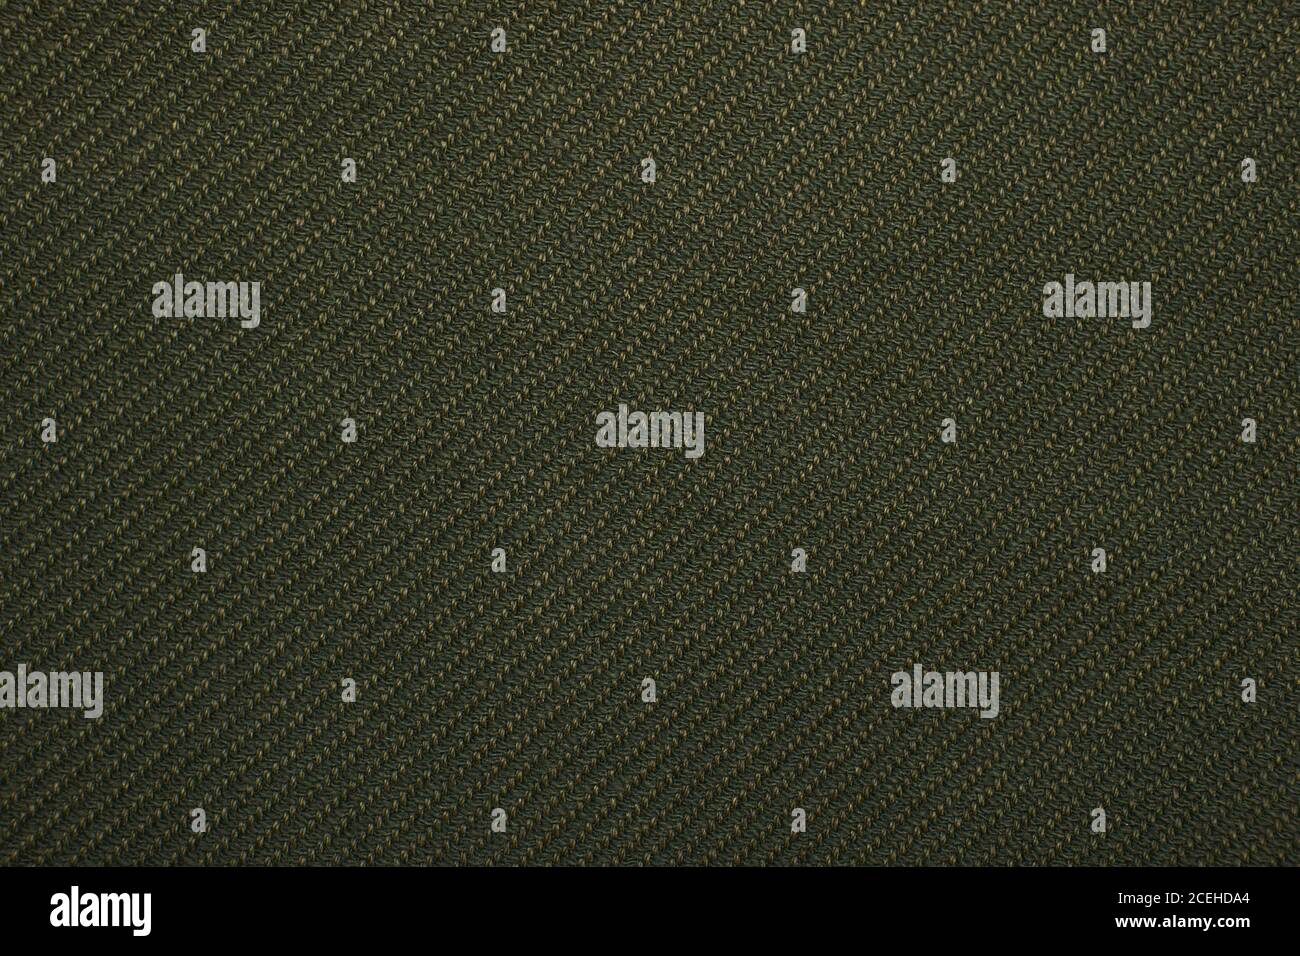 green twill weave fabric pattern texture background closeup Stock Photo